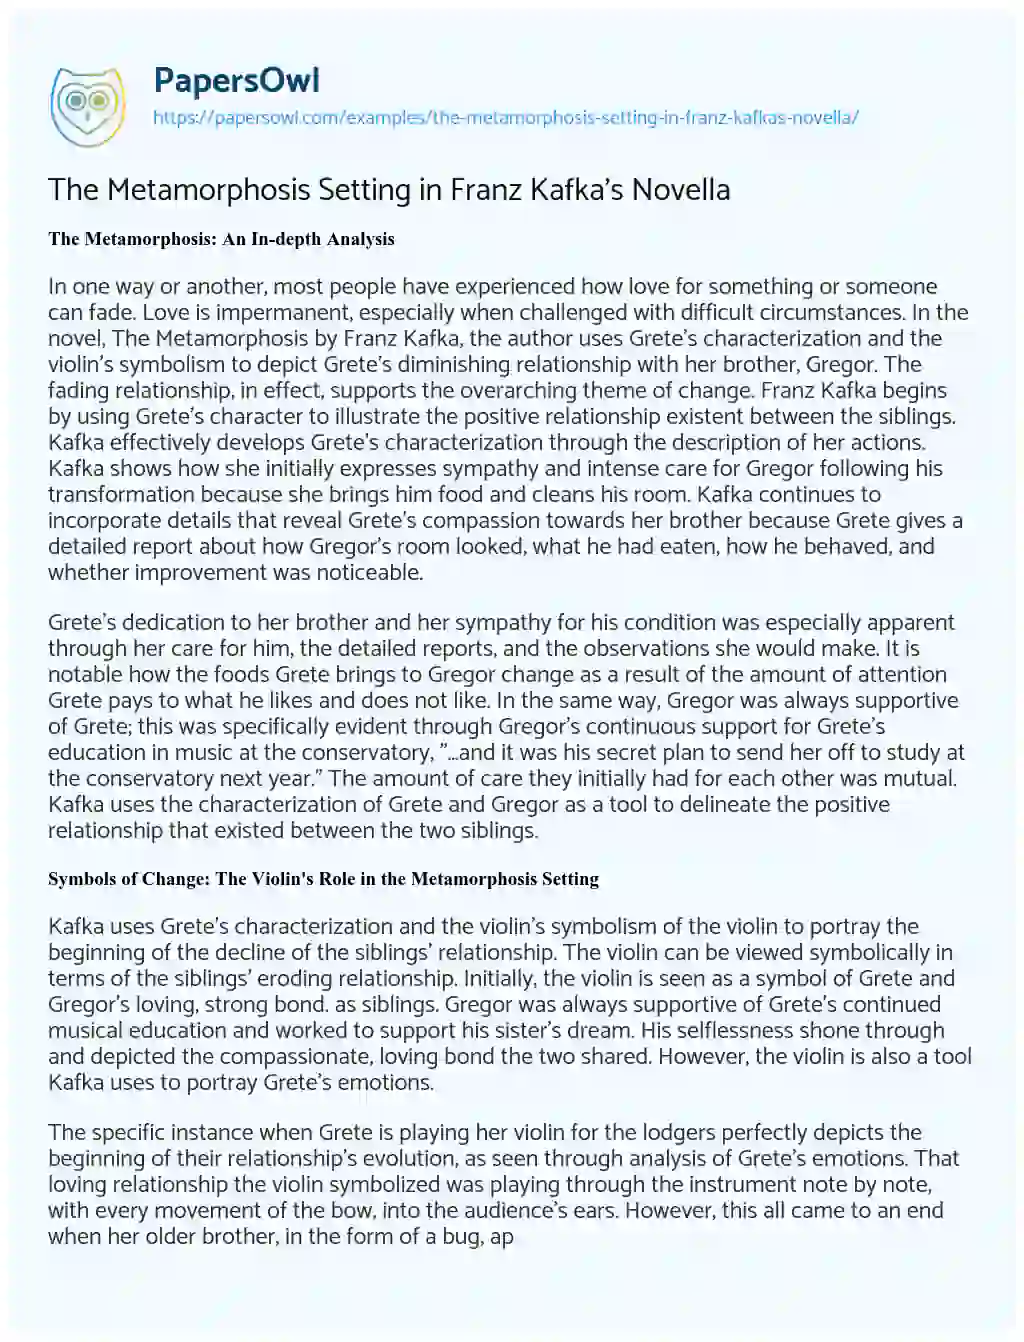 Essay on The Metamorphosis Setting in Franz Kafka’s Novella